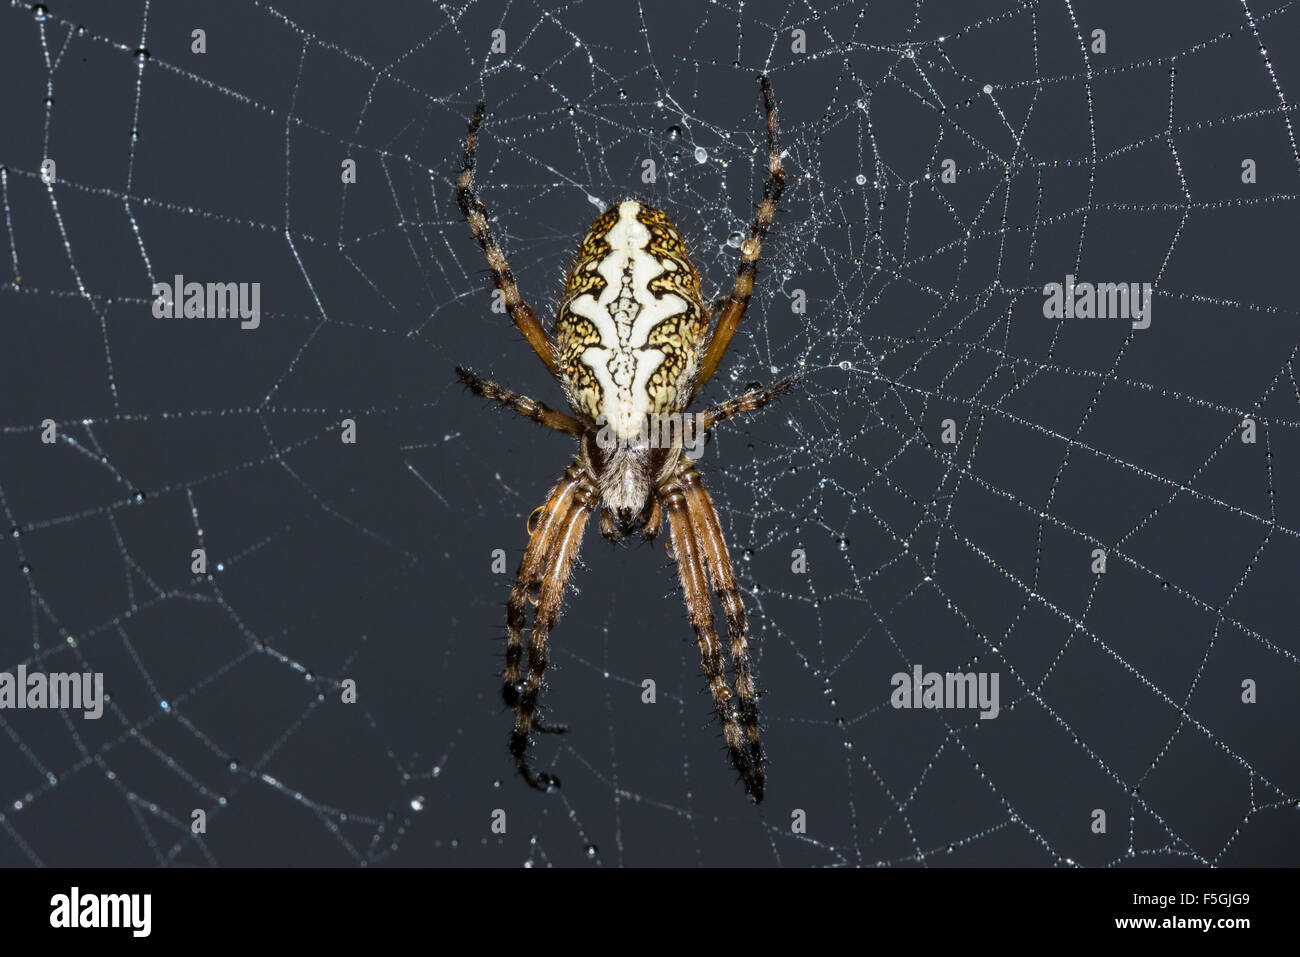 Oak spider (Aculepeira ceropegia), Province of South Tyrol, Trentino-Alto Adige, Italy Stock Photo